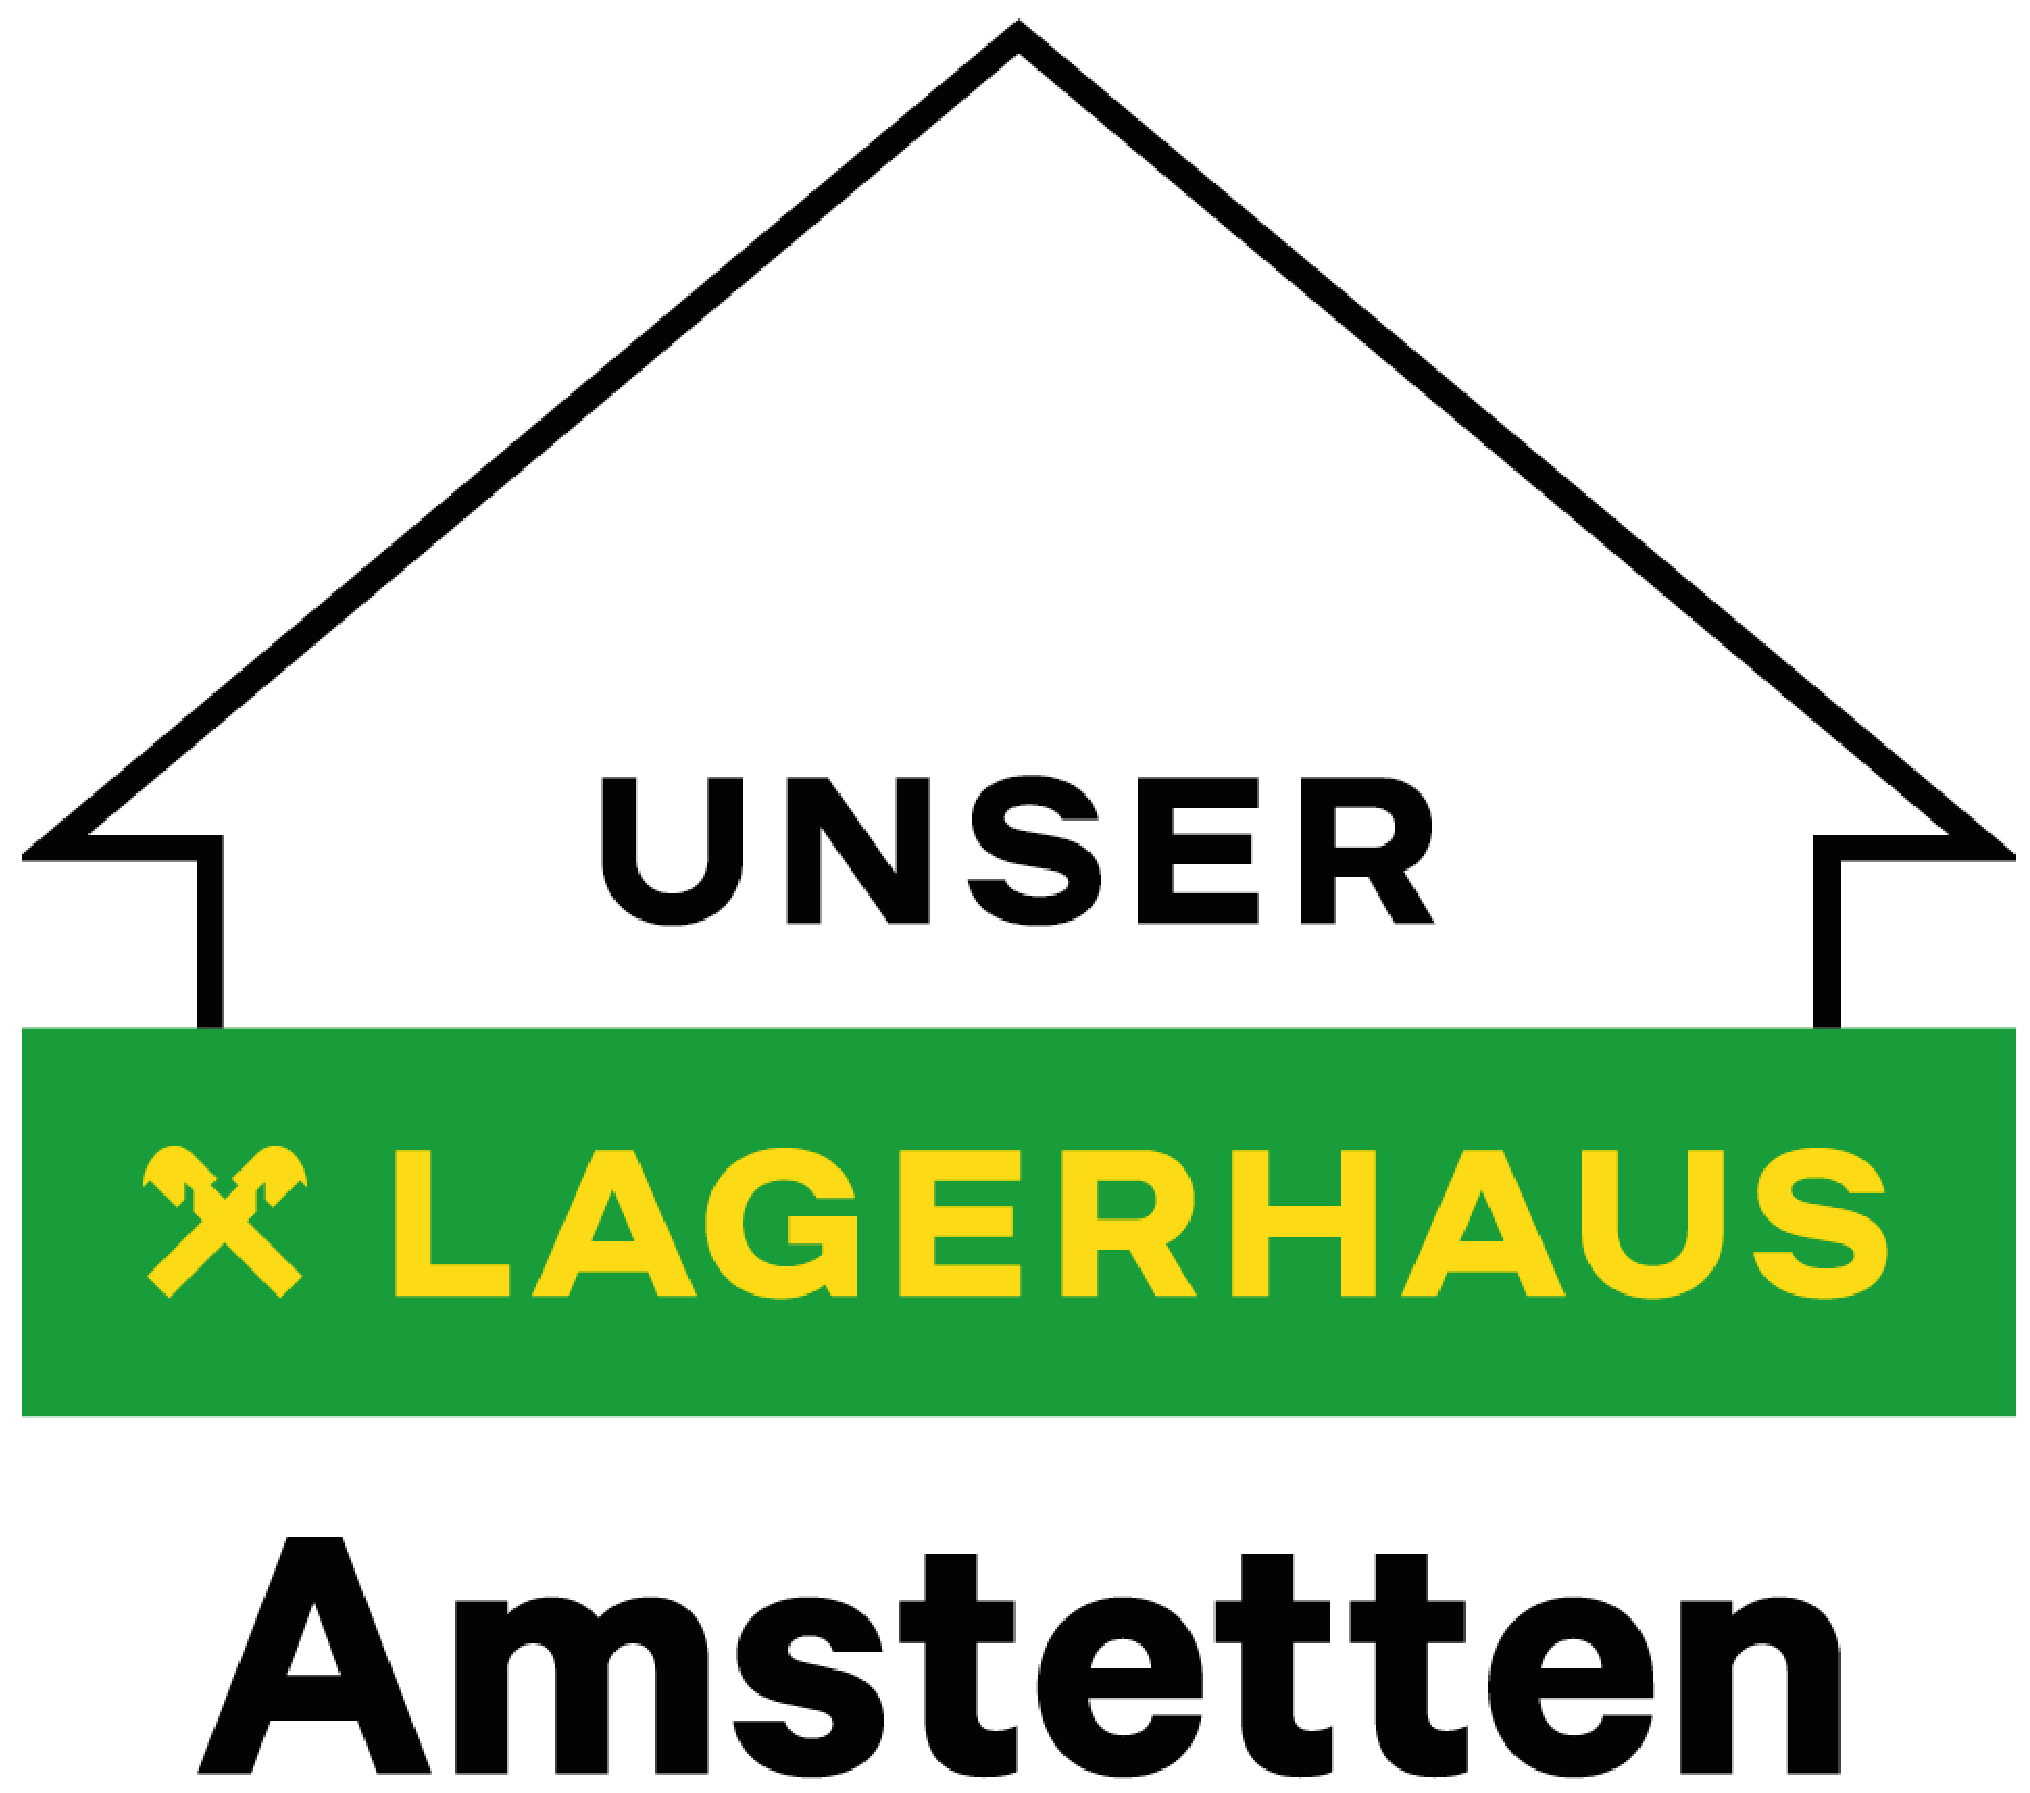 Lagerhaus Amstetten-01